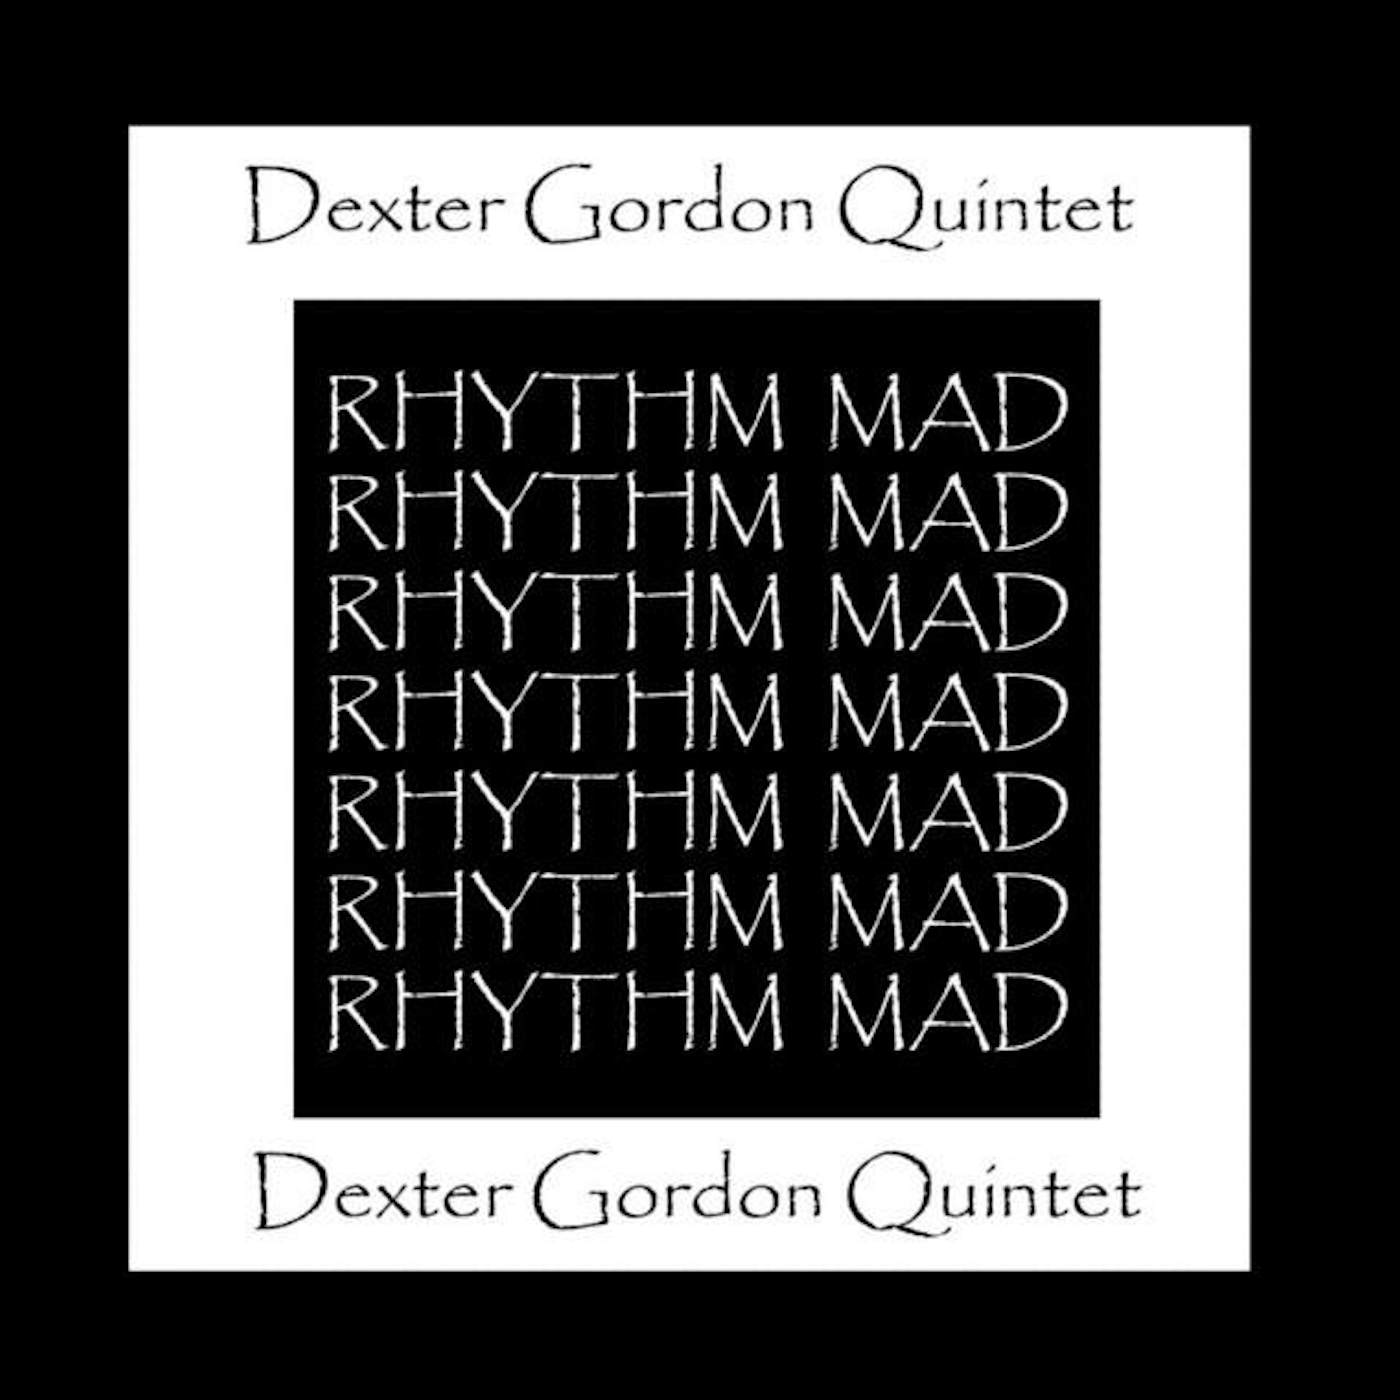 Dexter Gordon Quintet